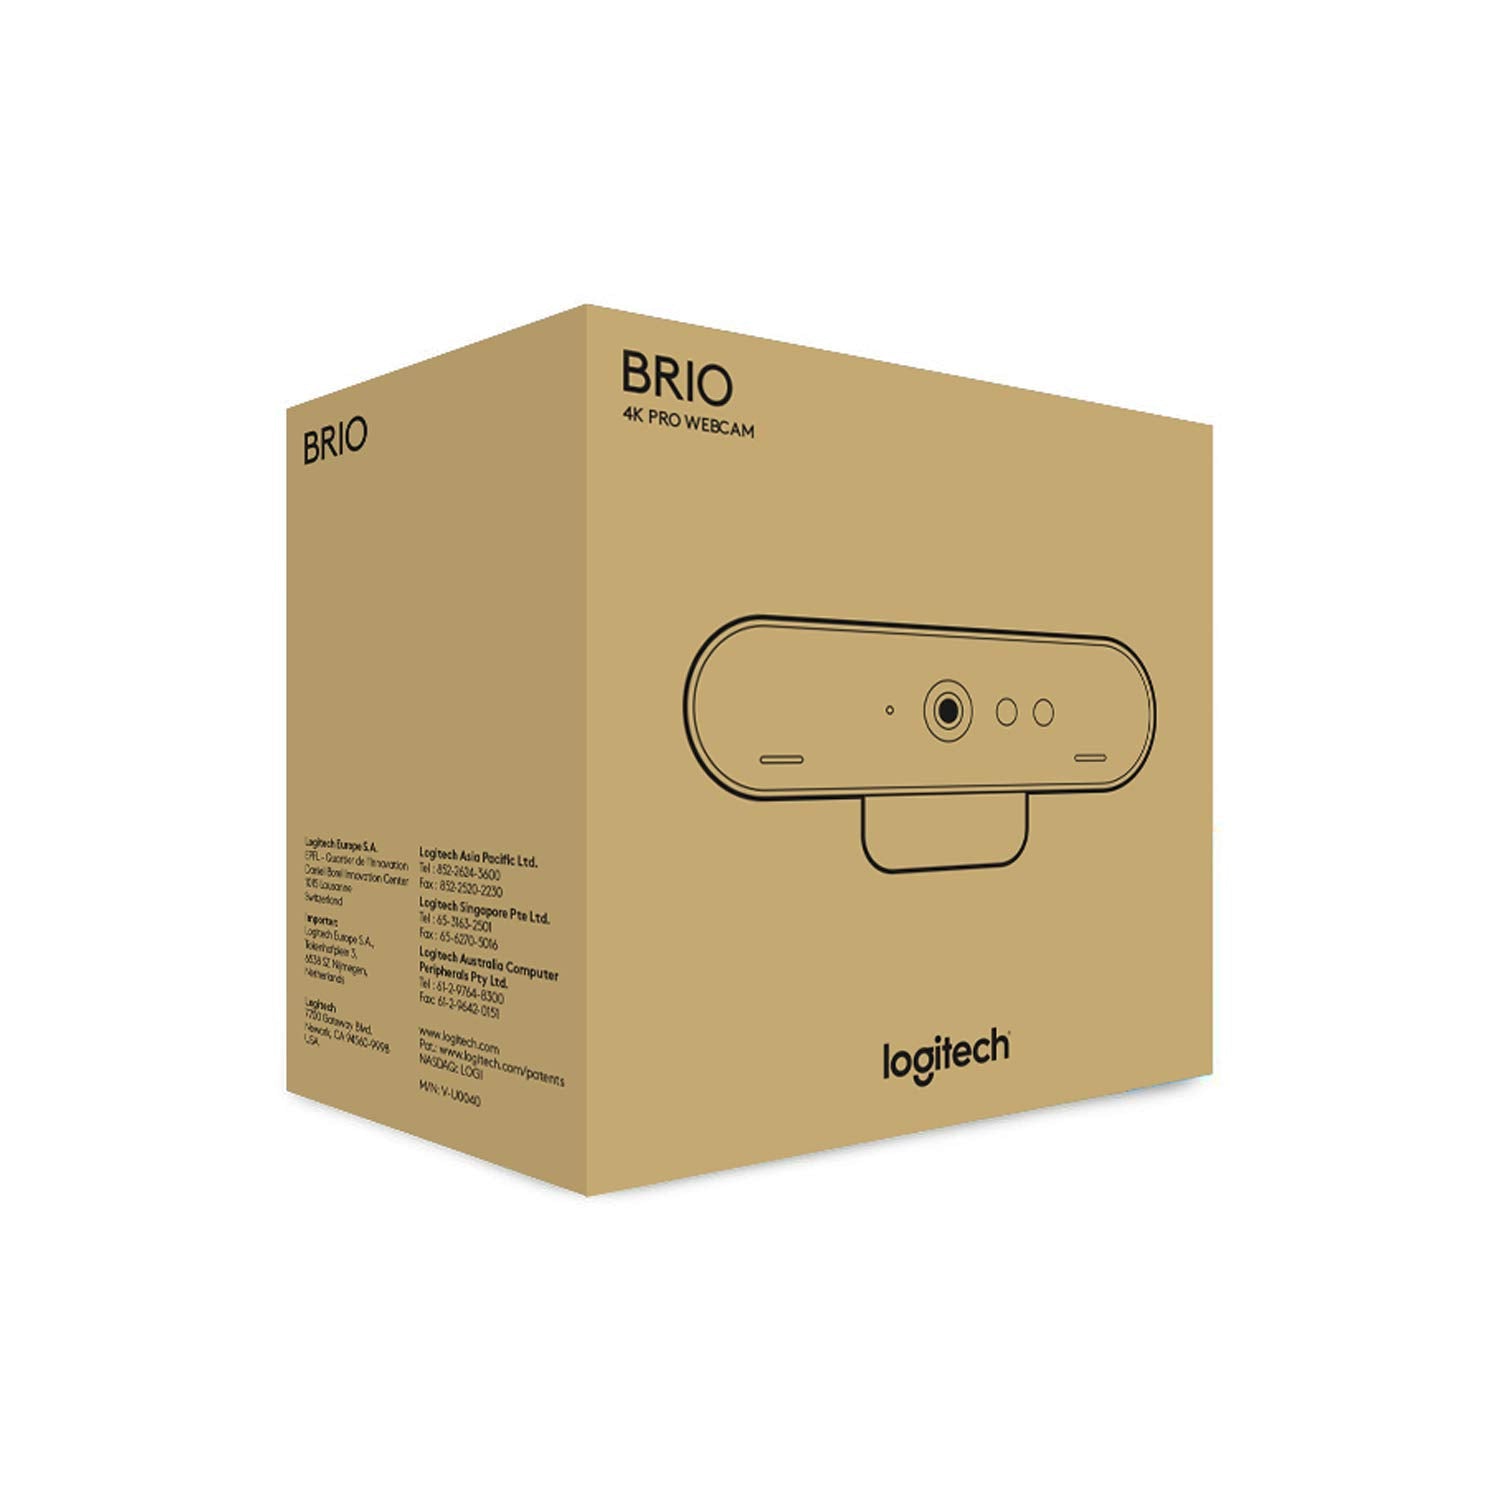 Logitech Brio Ultra HD Pro Webcam 4K webcam with HDR